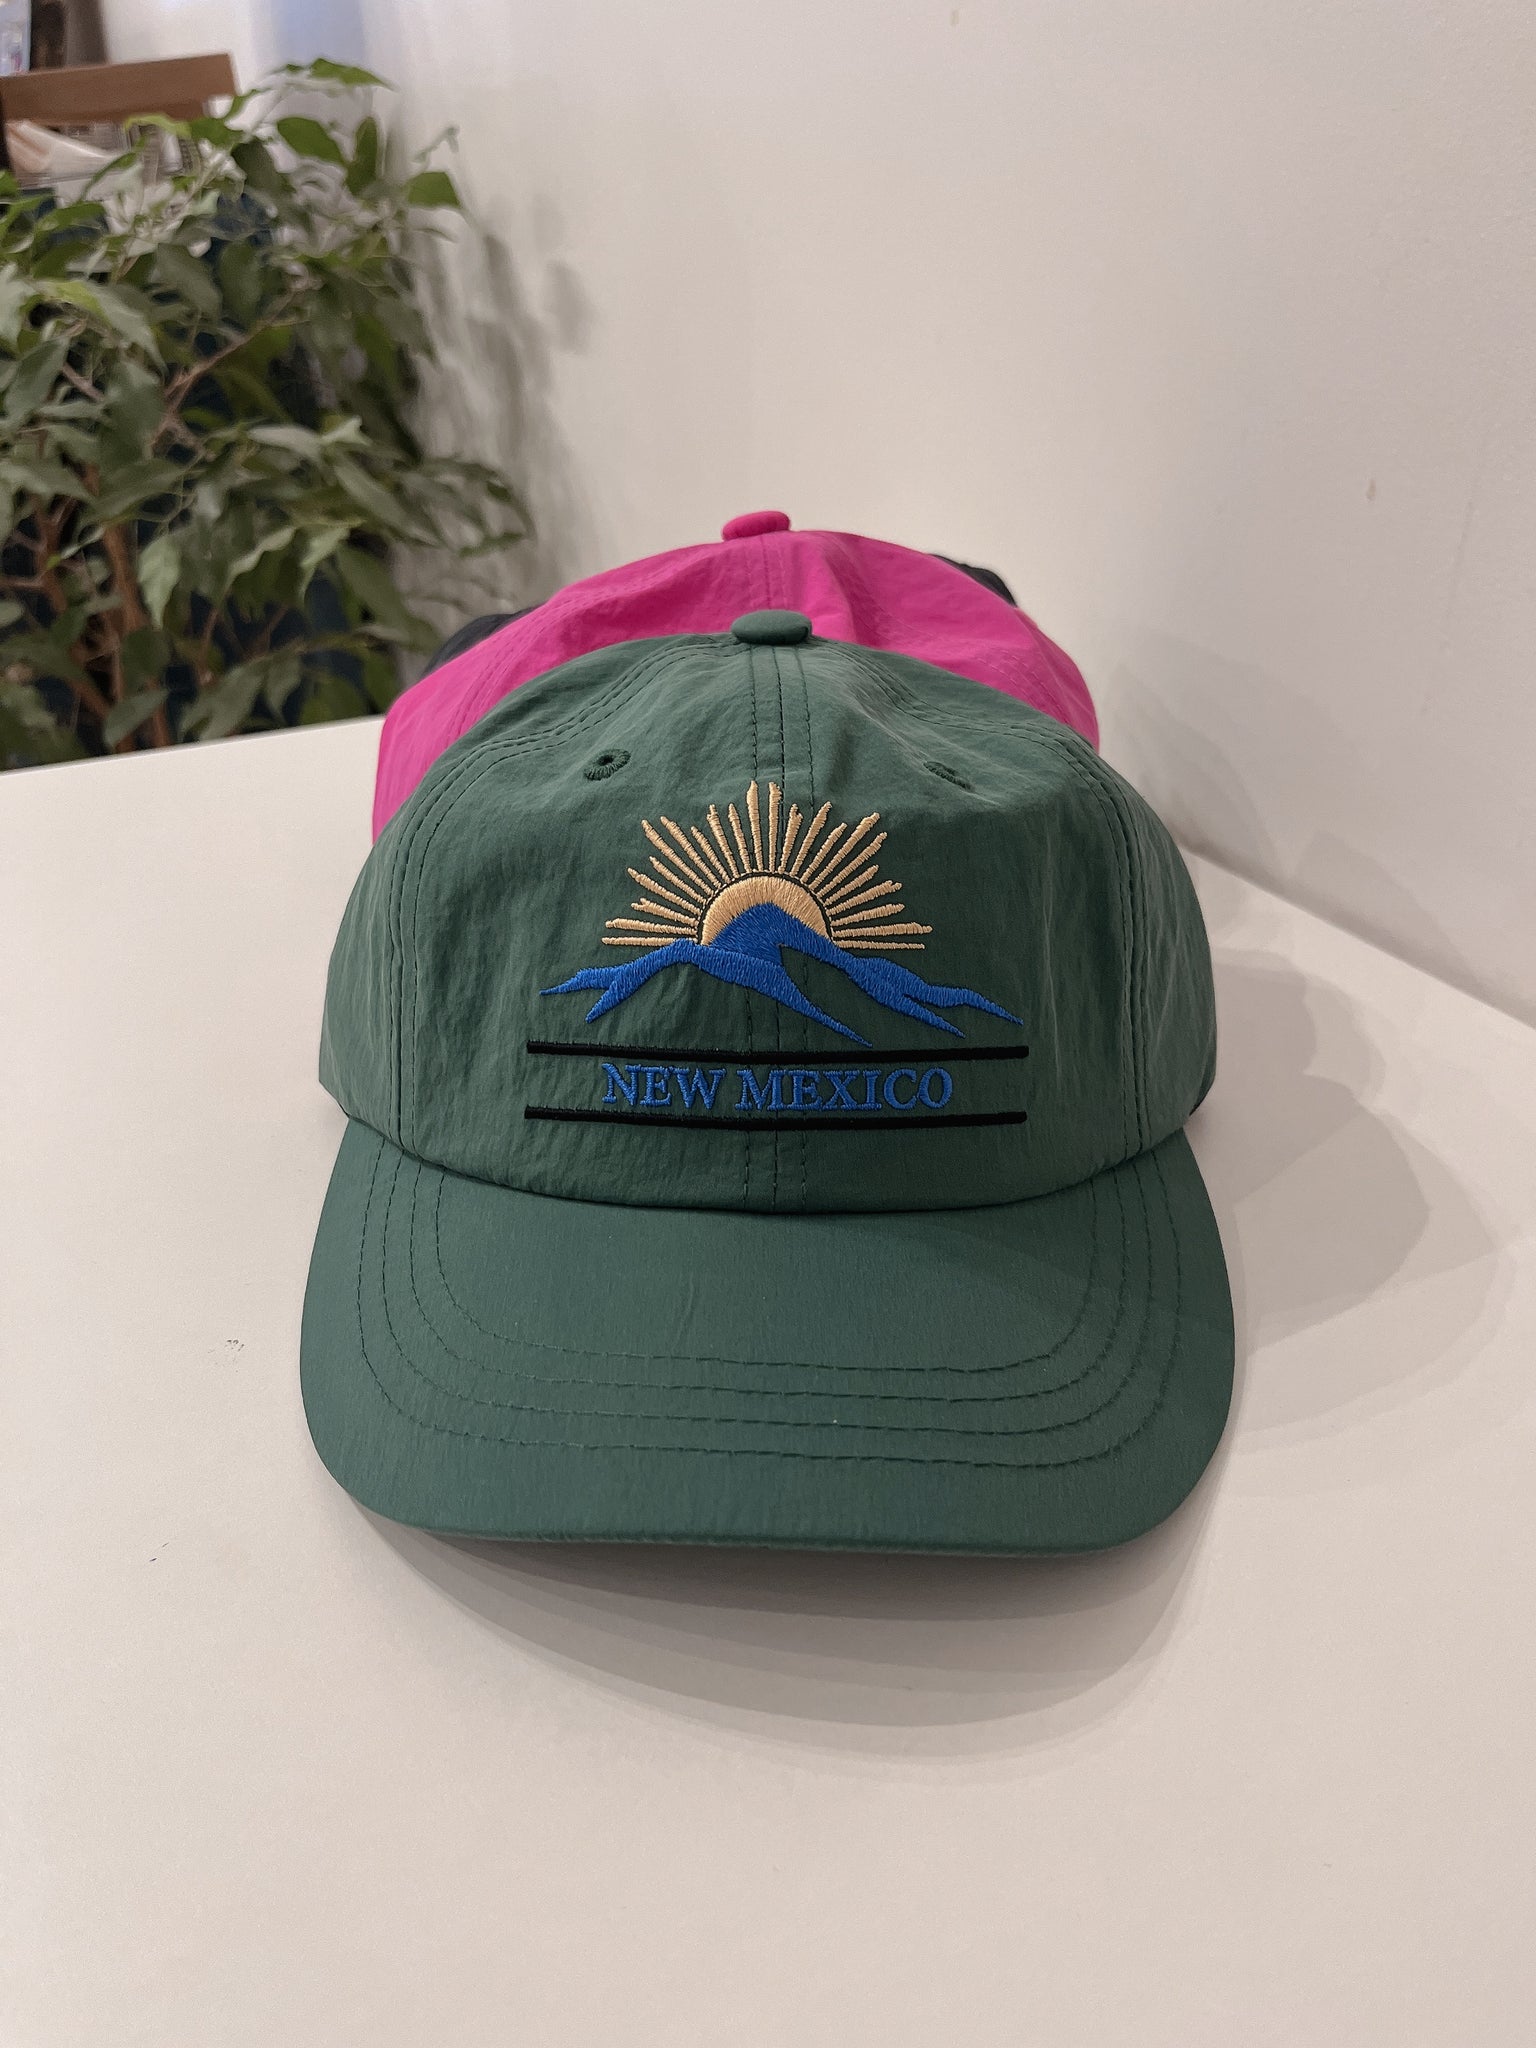 SUO New Mexico cap